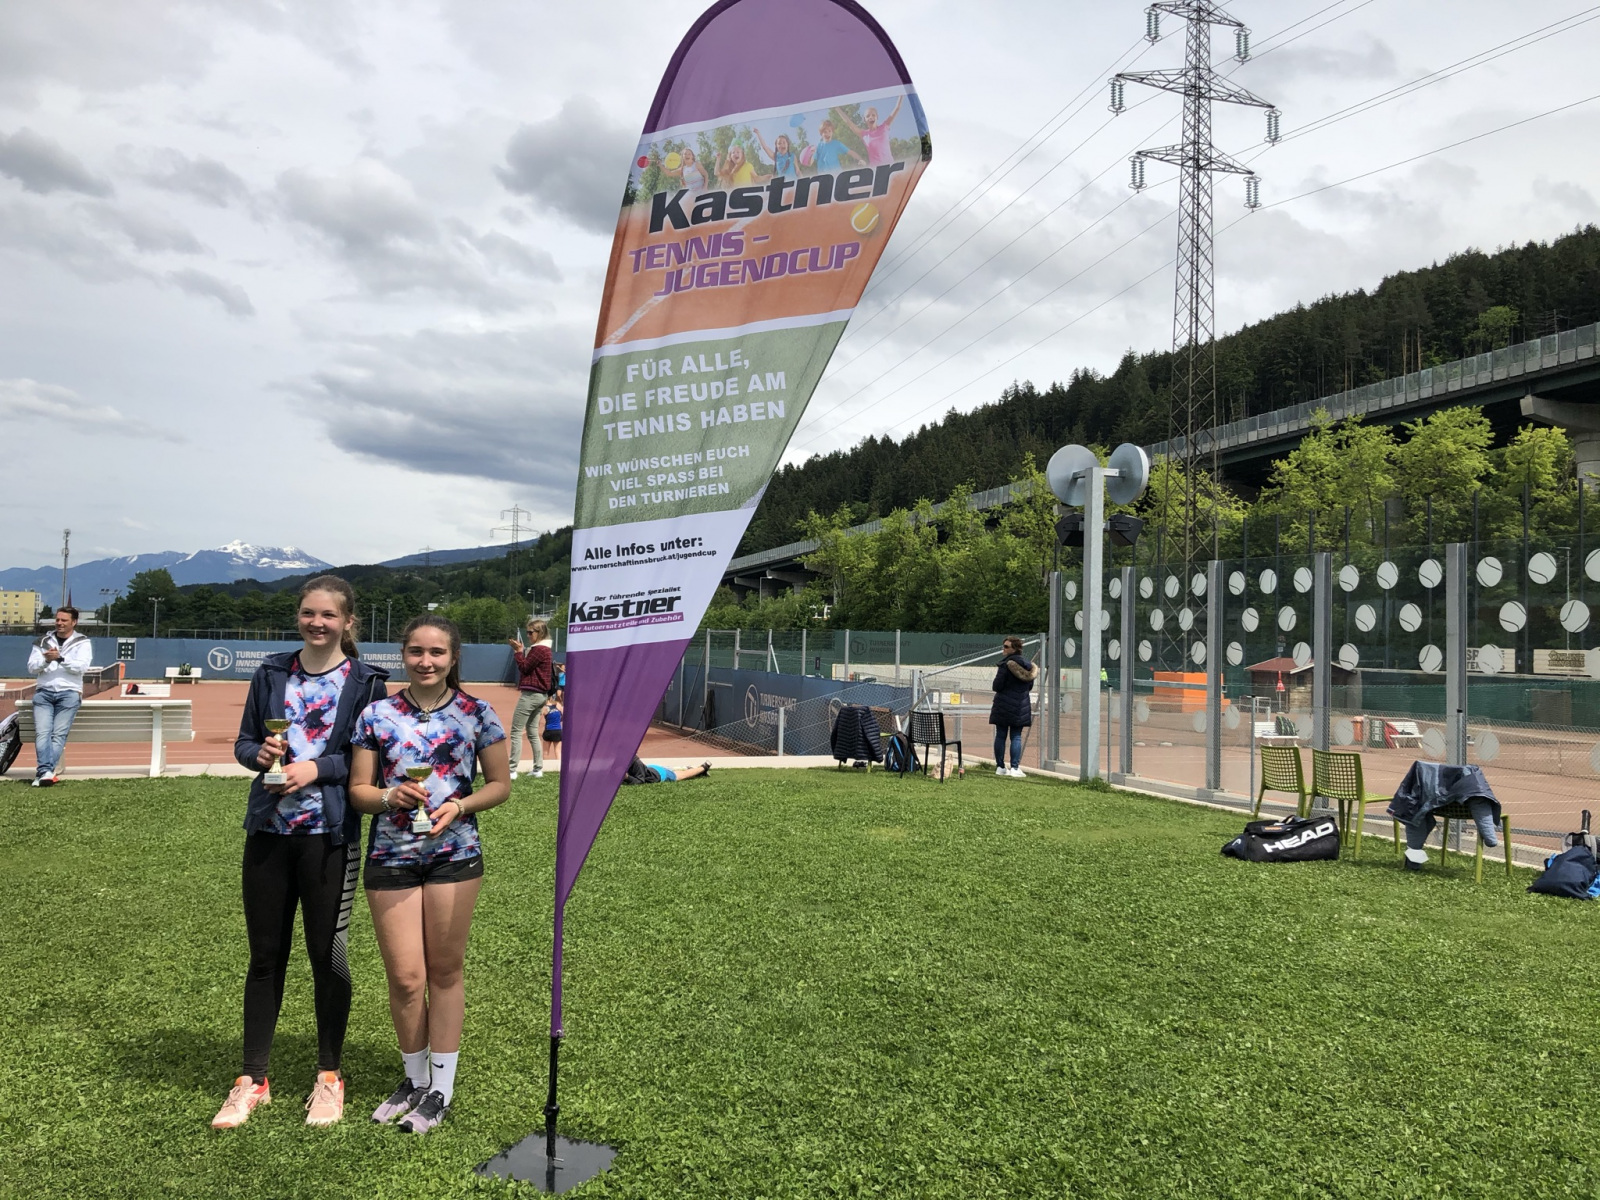 Kastner-Tennis-Jugend-Cup-2021-Turnerschaft-Innsbruck-17